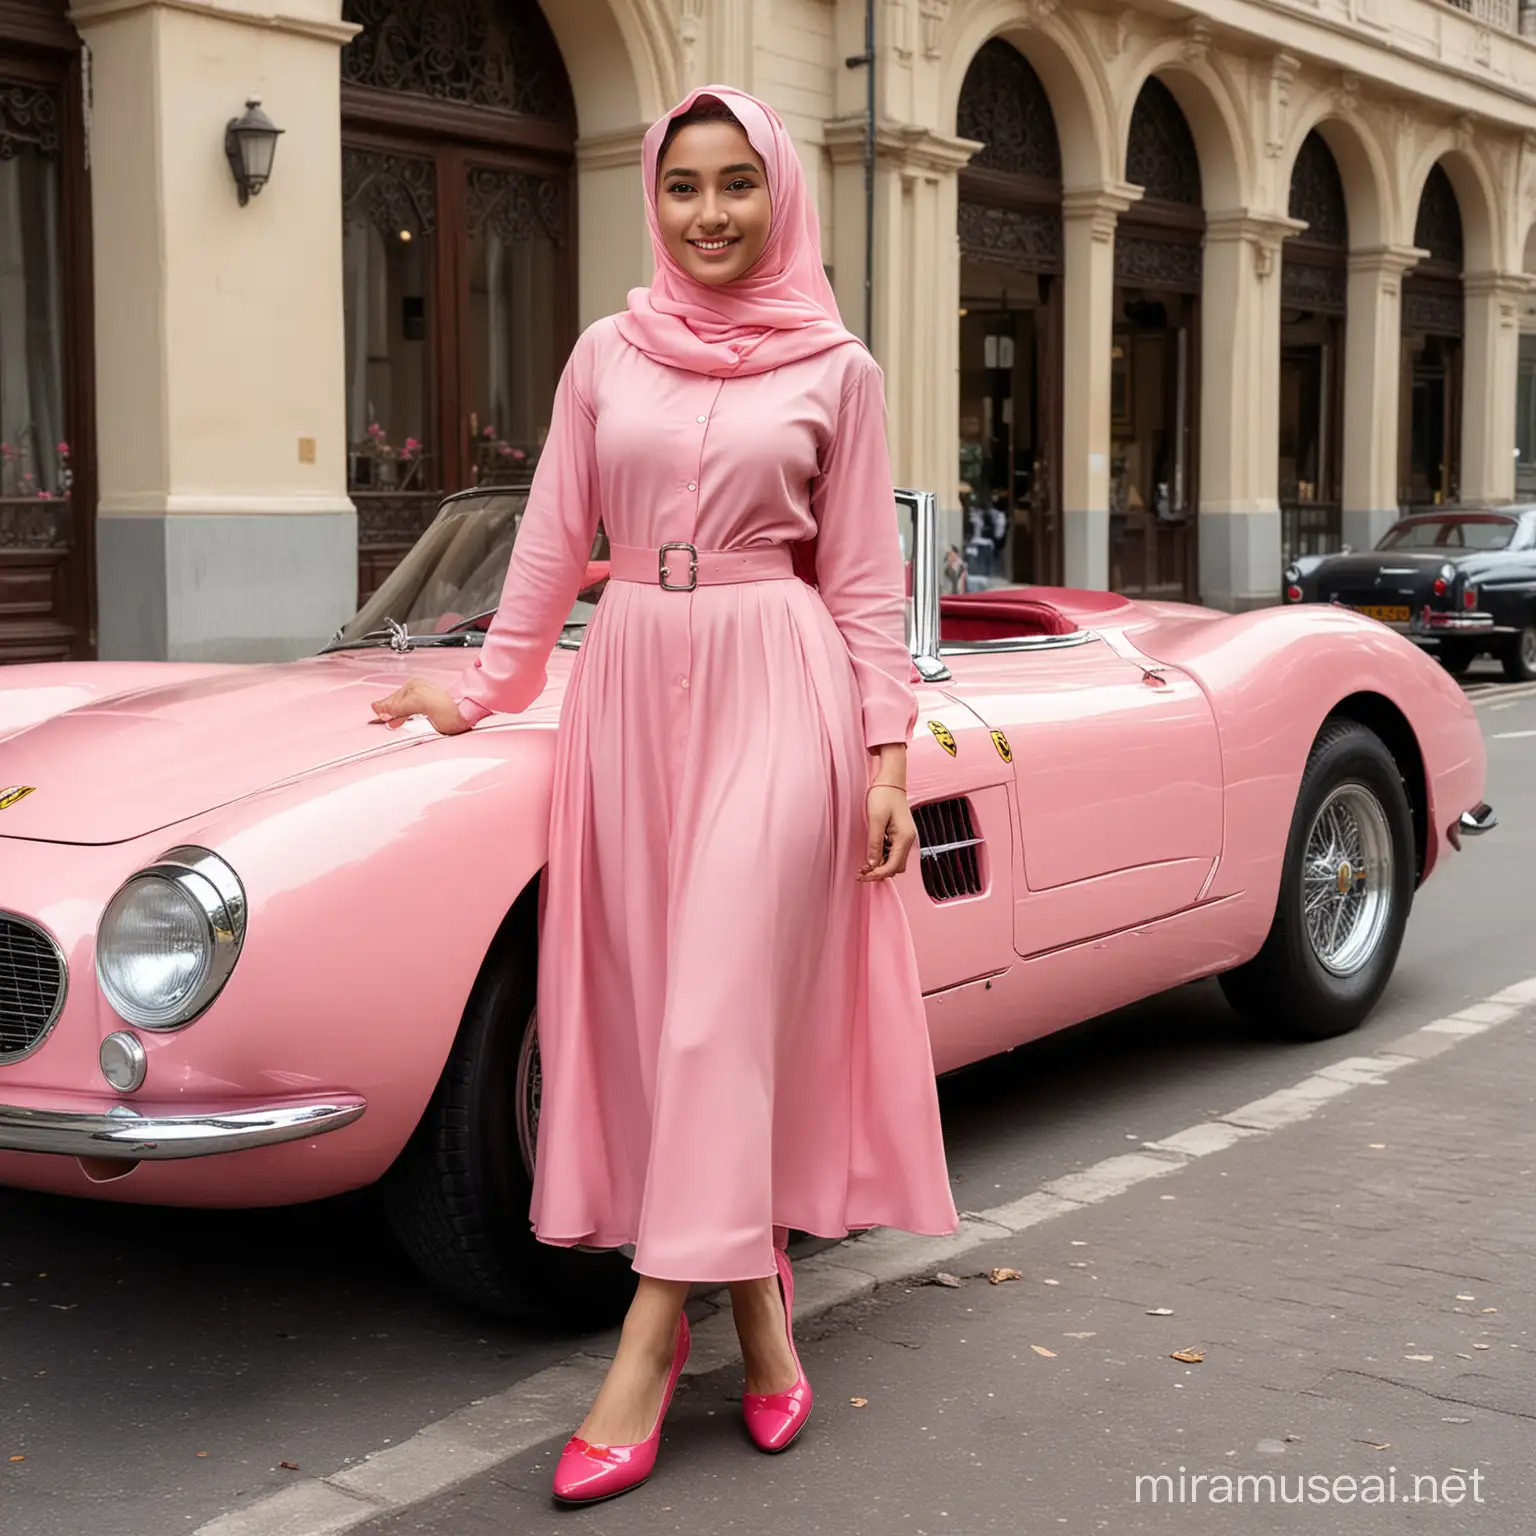 Fashionable Indonesian Girl with 1957 Ferrari Testa Rossa in City Park Street